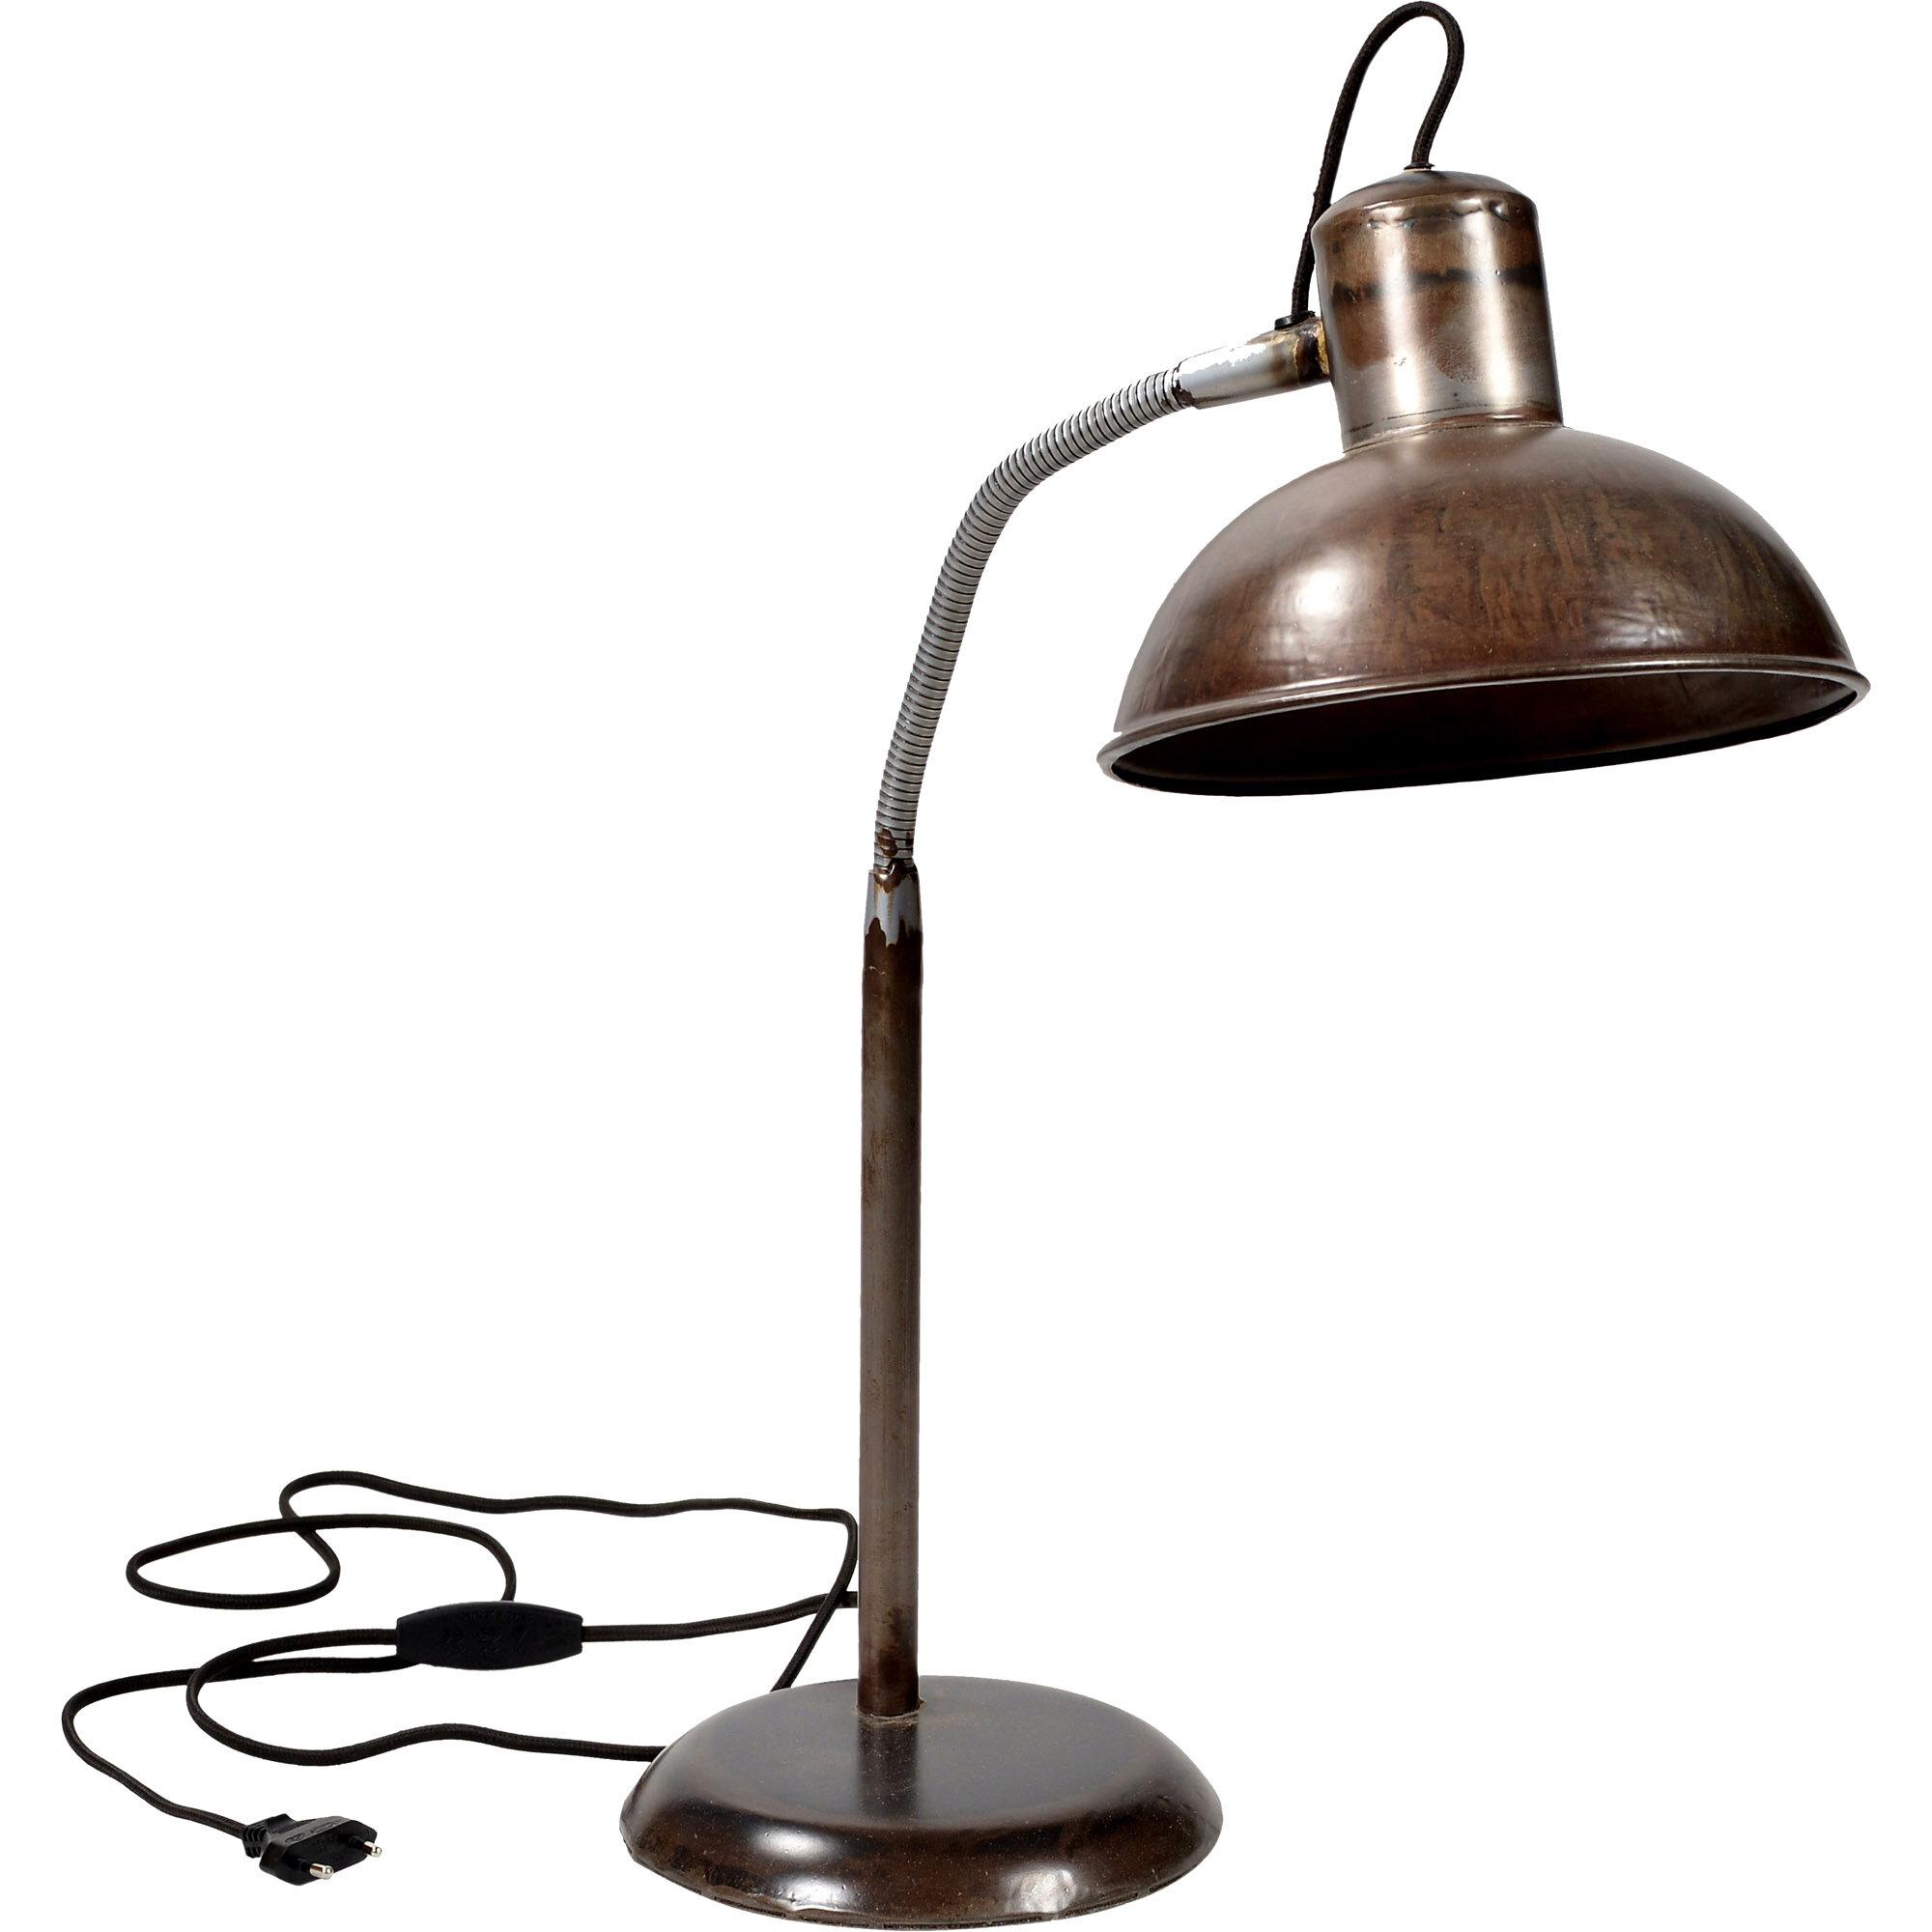  Walentin bordlampe med unik finish - klarlak fra Trademark Living i Jern (Varenr: M08211)